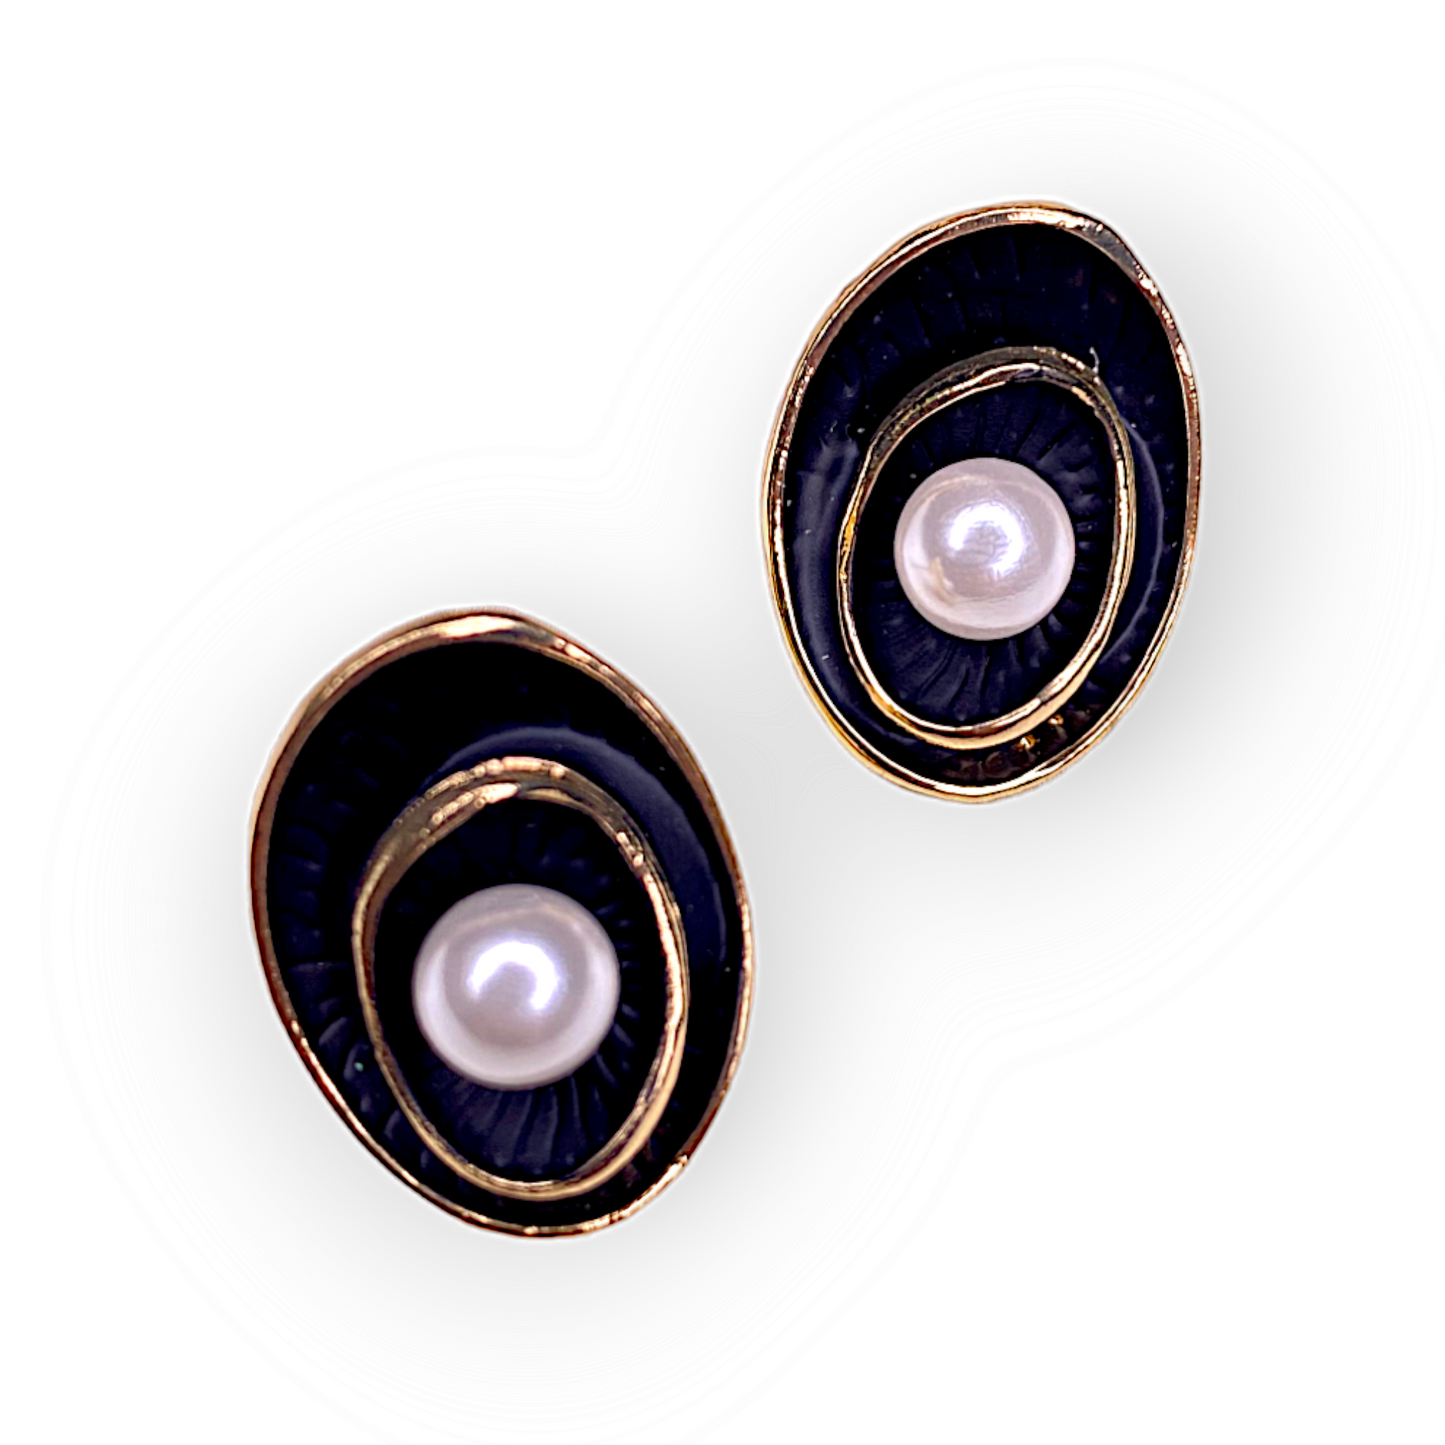 Circular Black and Golden Pearl Earrings